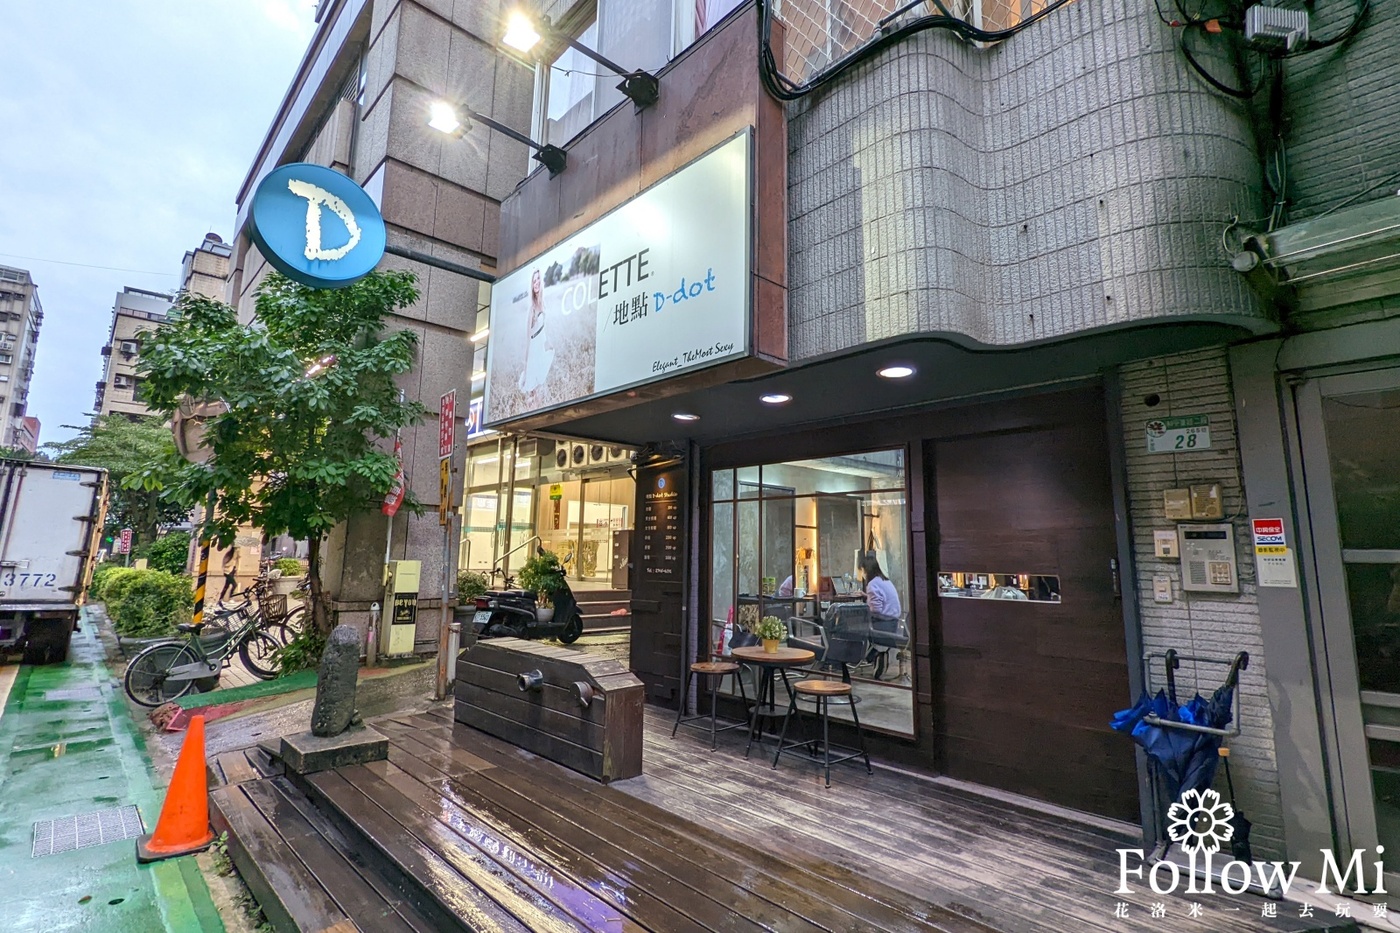 D-dot,D-dot studio,台北剪髮,大安區髮廊,科技大樓站